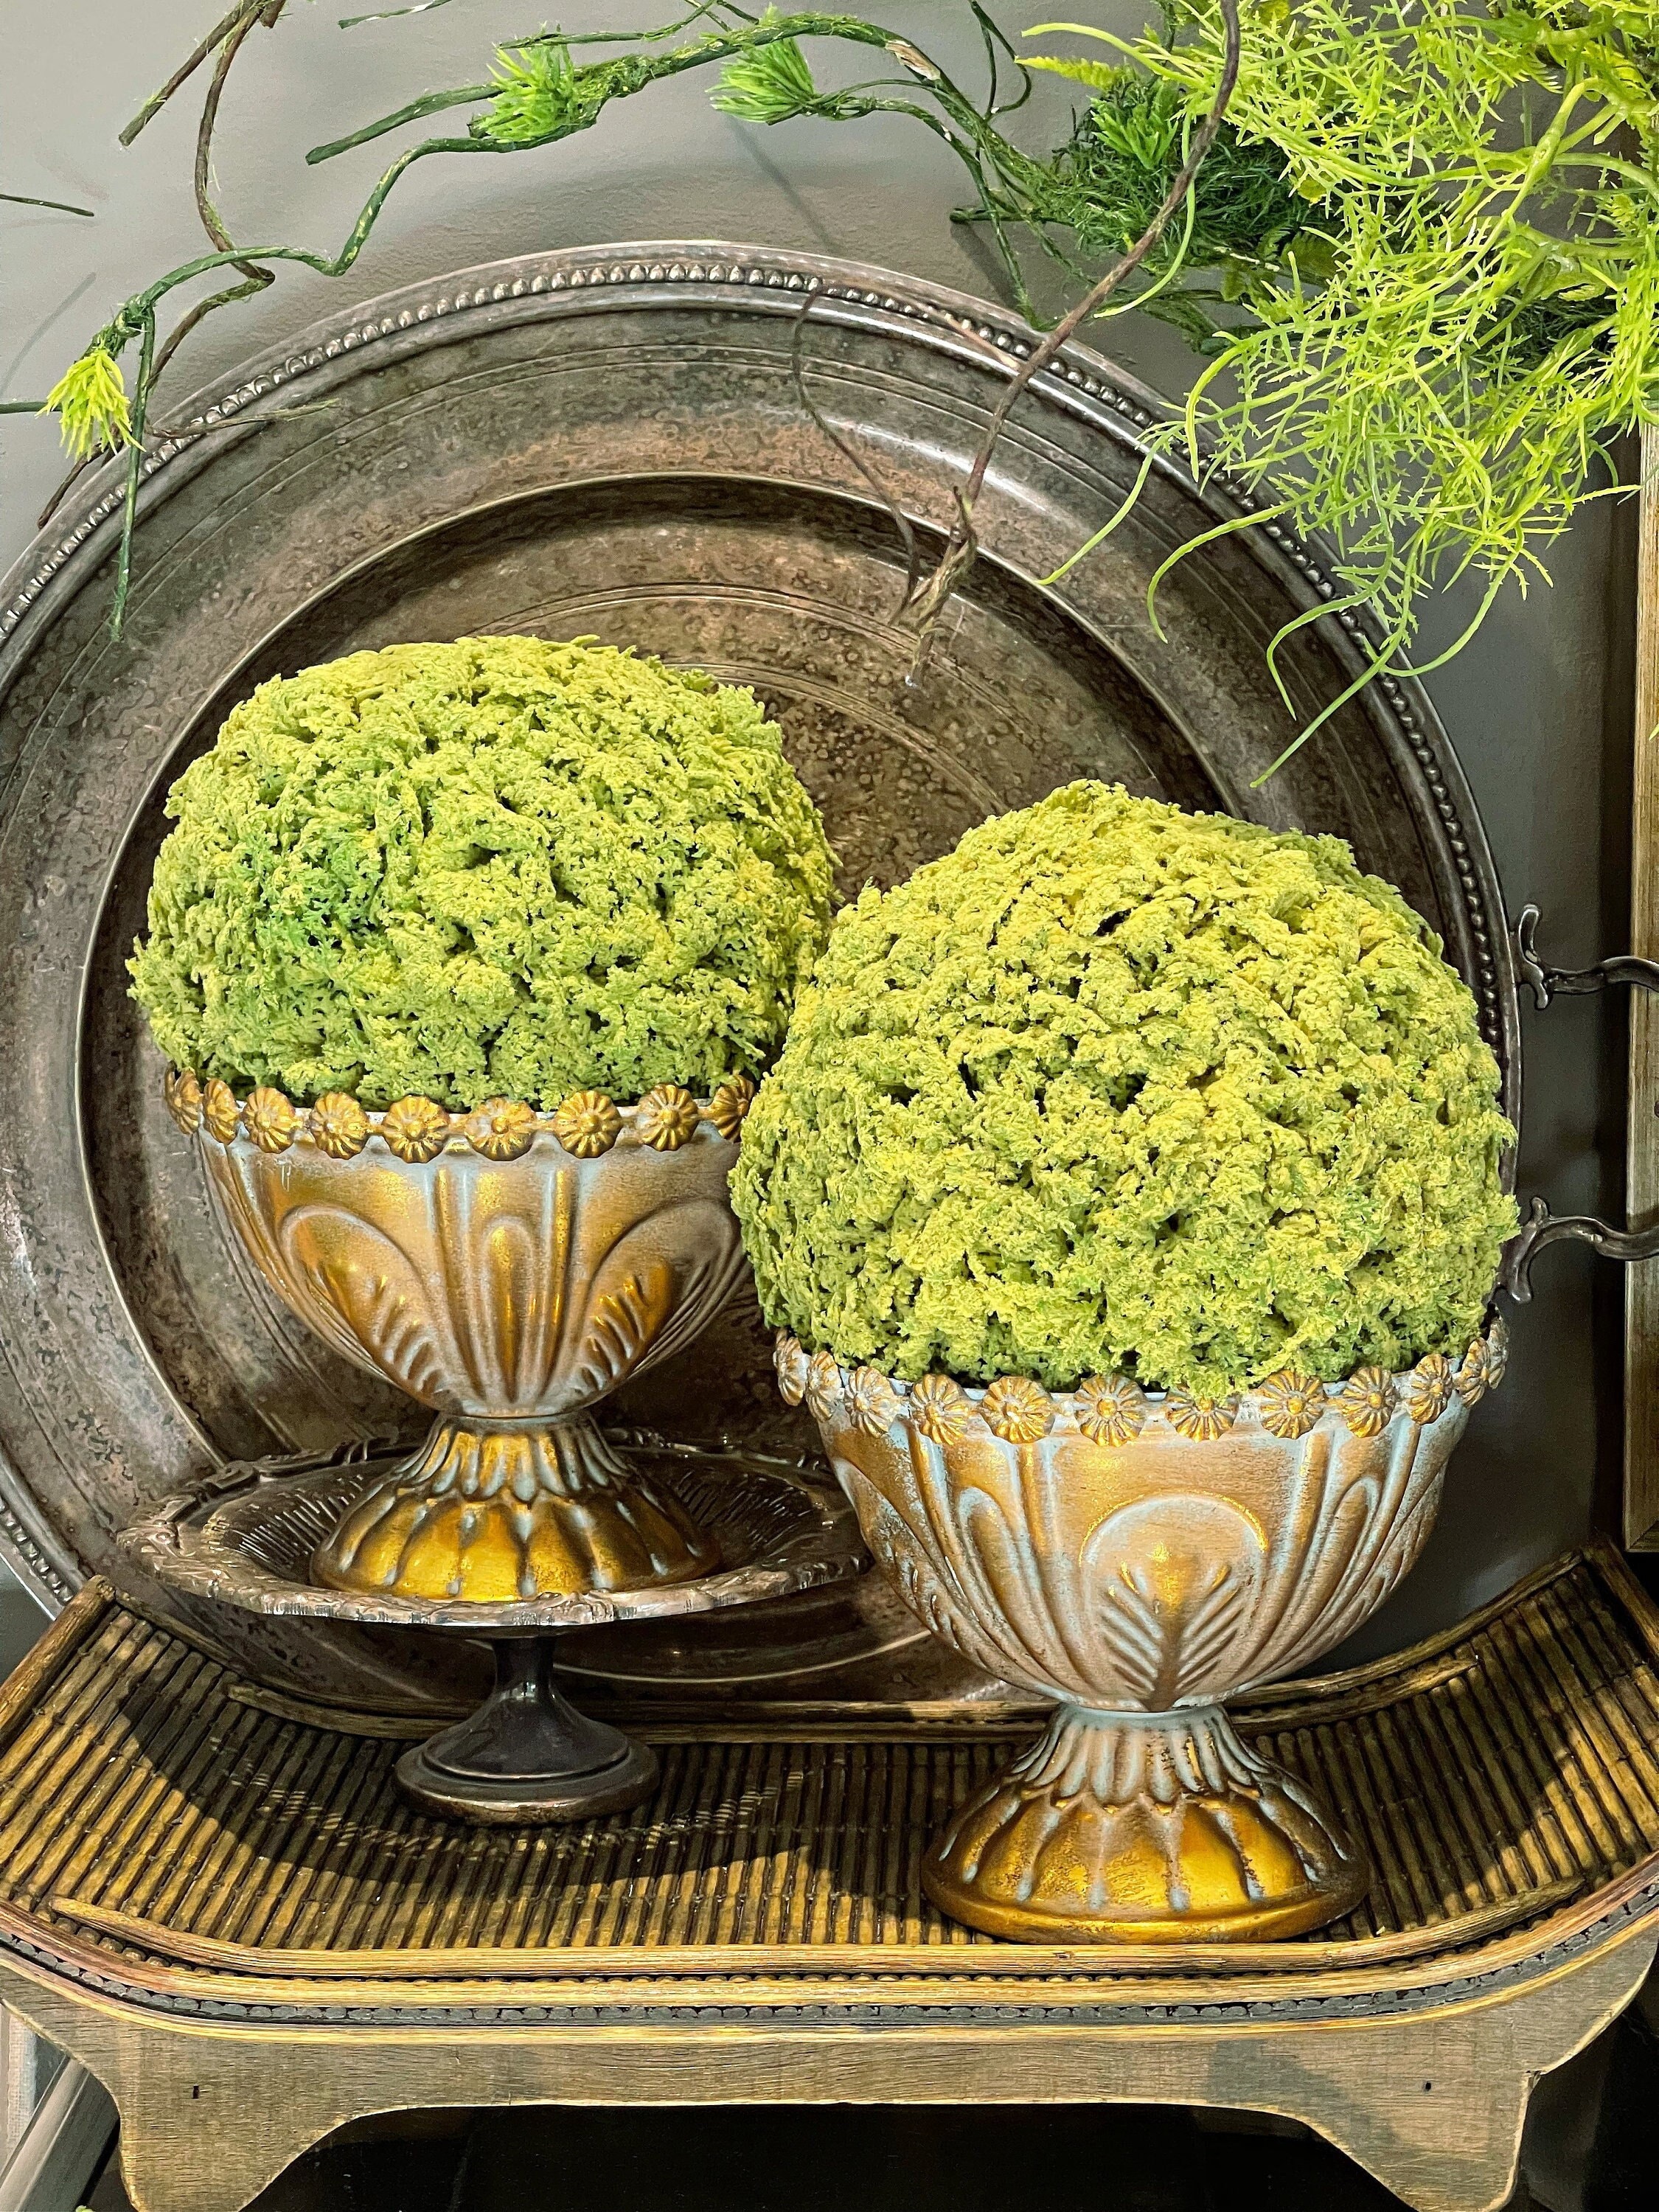 6pc Moss Balls, Decorative Balls | adamsbargainshop